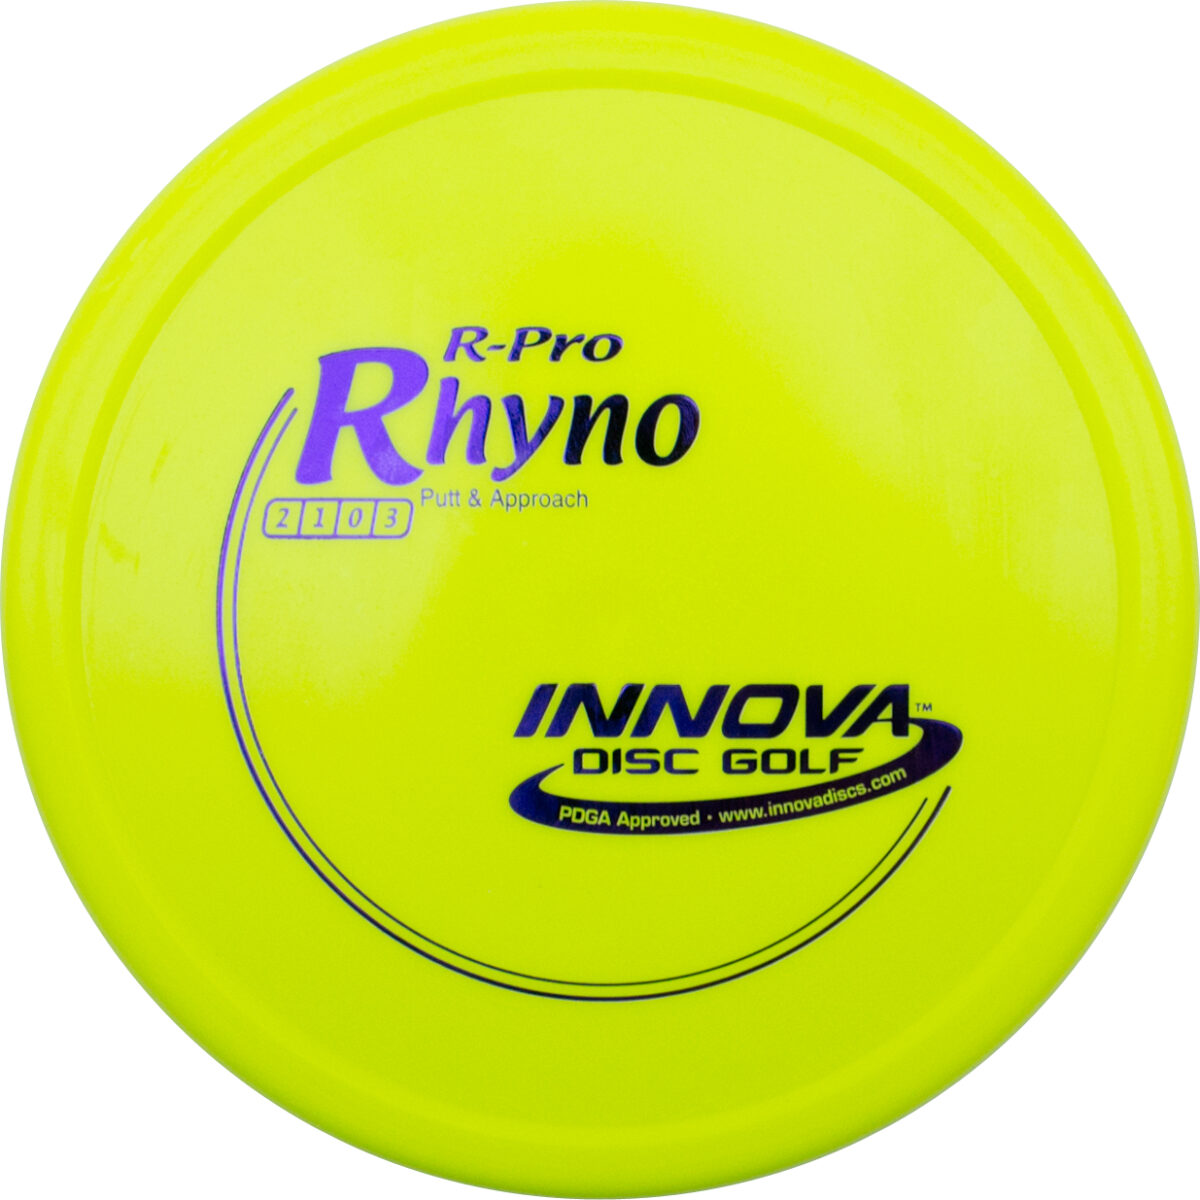 Innova R-Pro Rhyno. Yellow color.